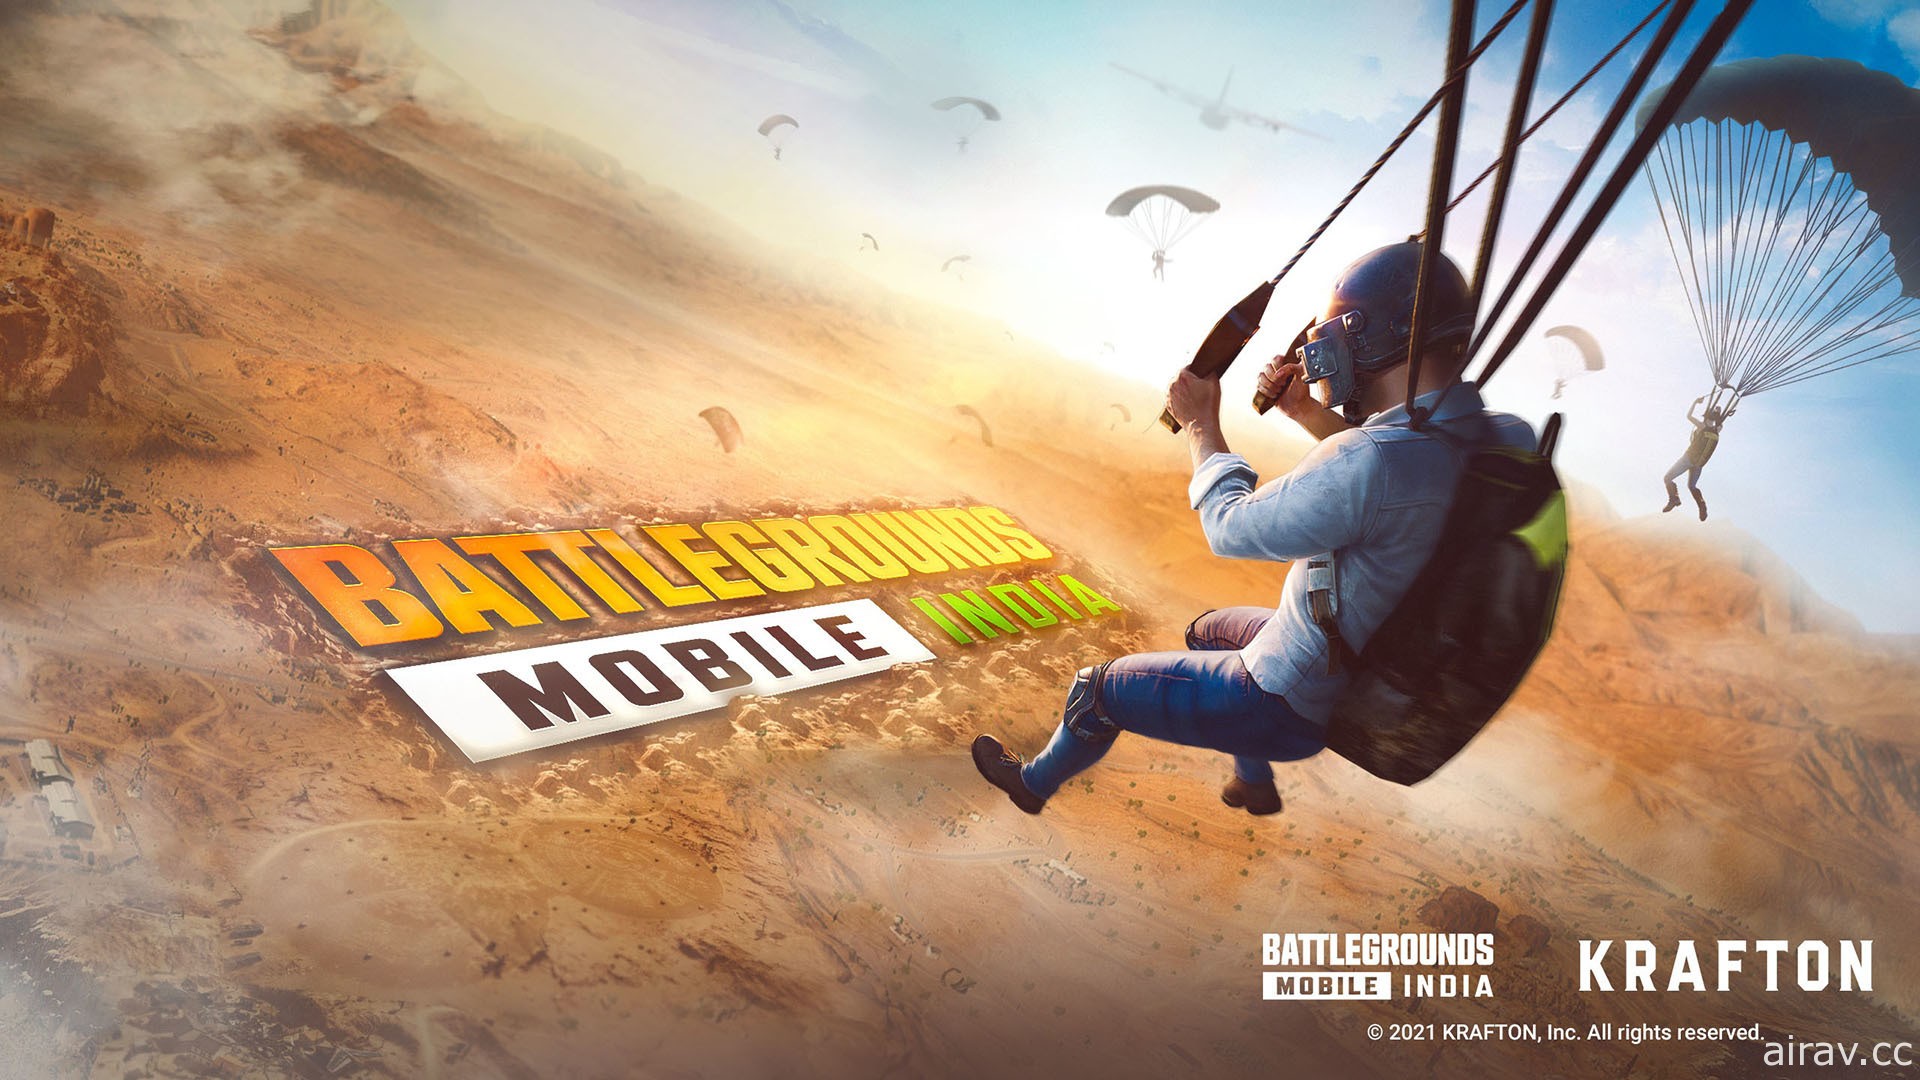 《BATTLEGROUNDS MOBILE INDIA》預先註冊突破 2,000 萬 重新打入印度市場